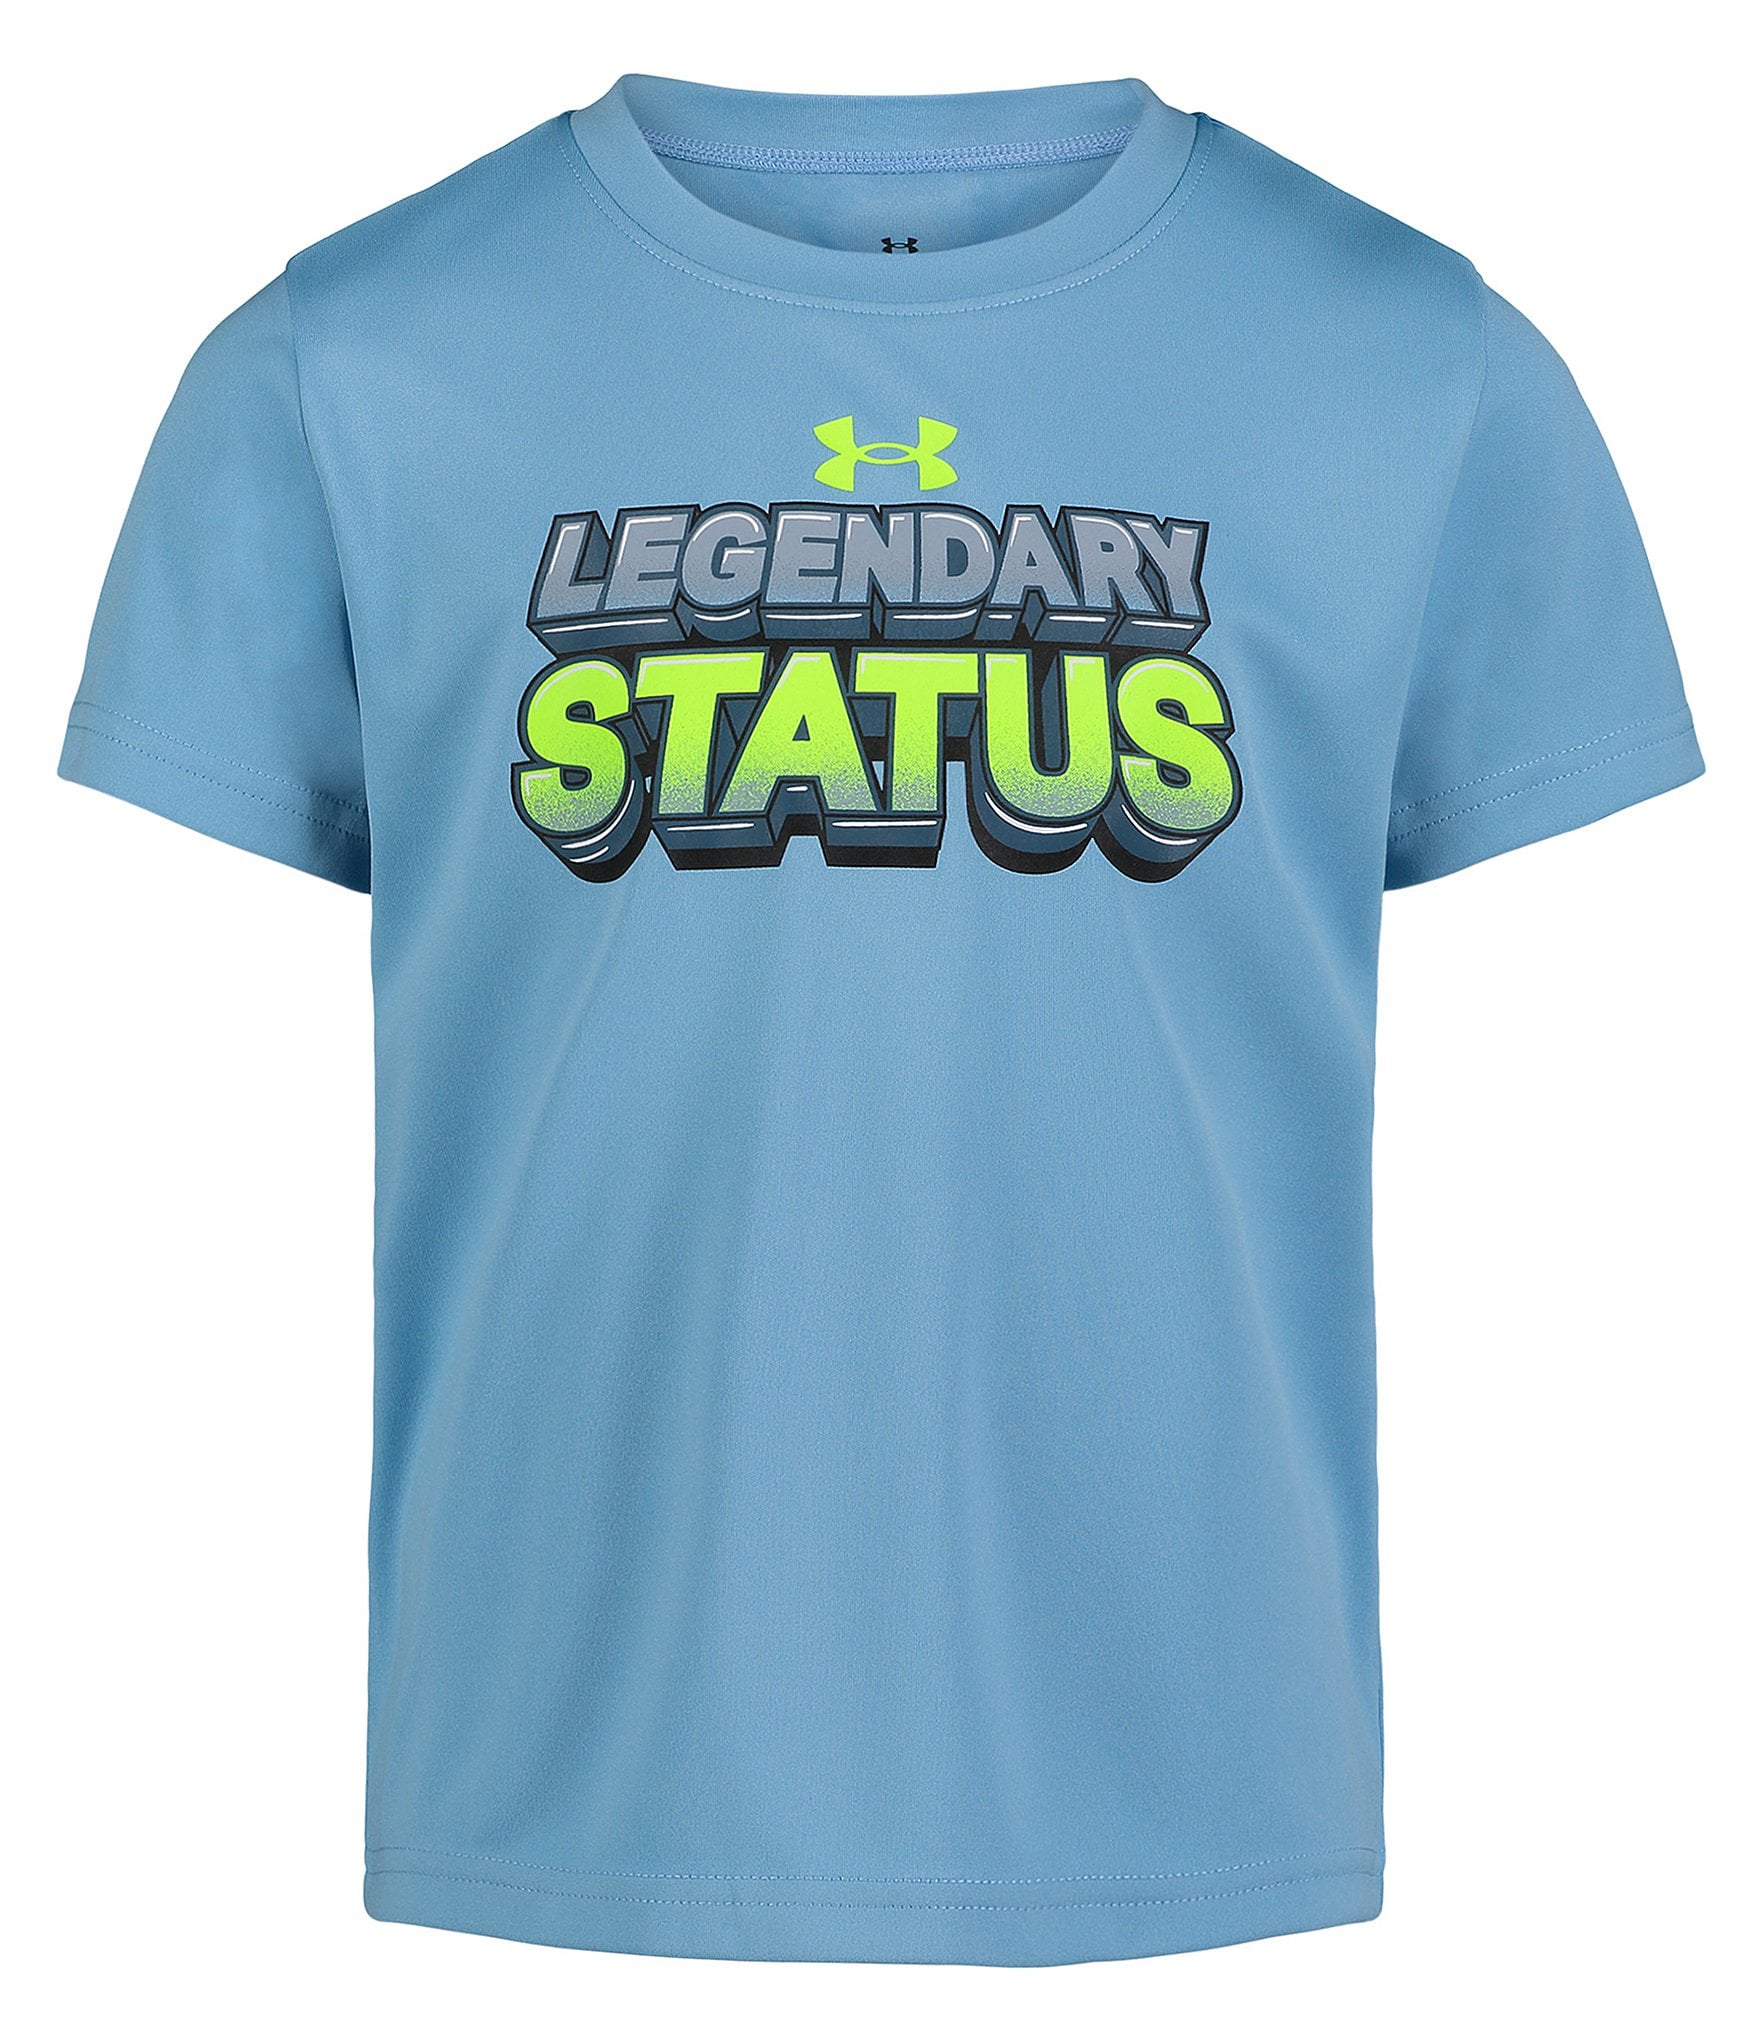 Under Armour Little Boys 2T-7 Short Sleeve Legendary Status Graphic T-Shirt